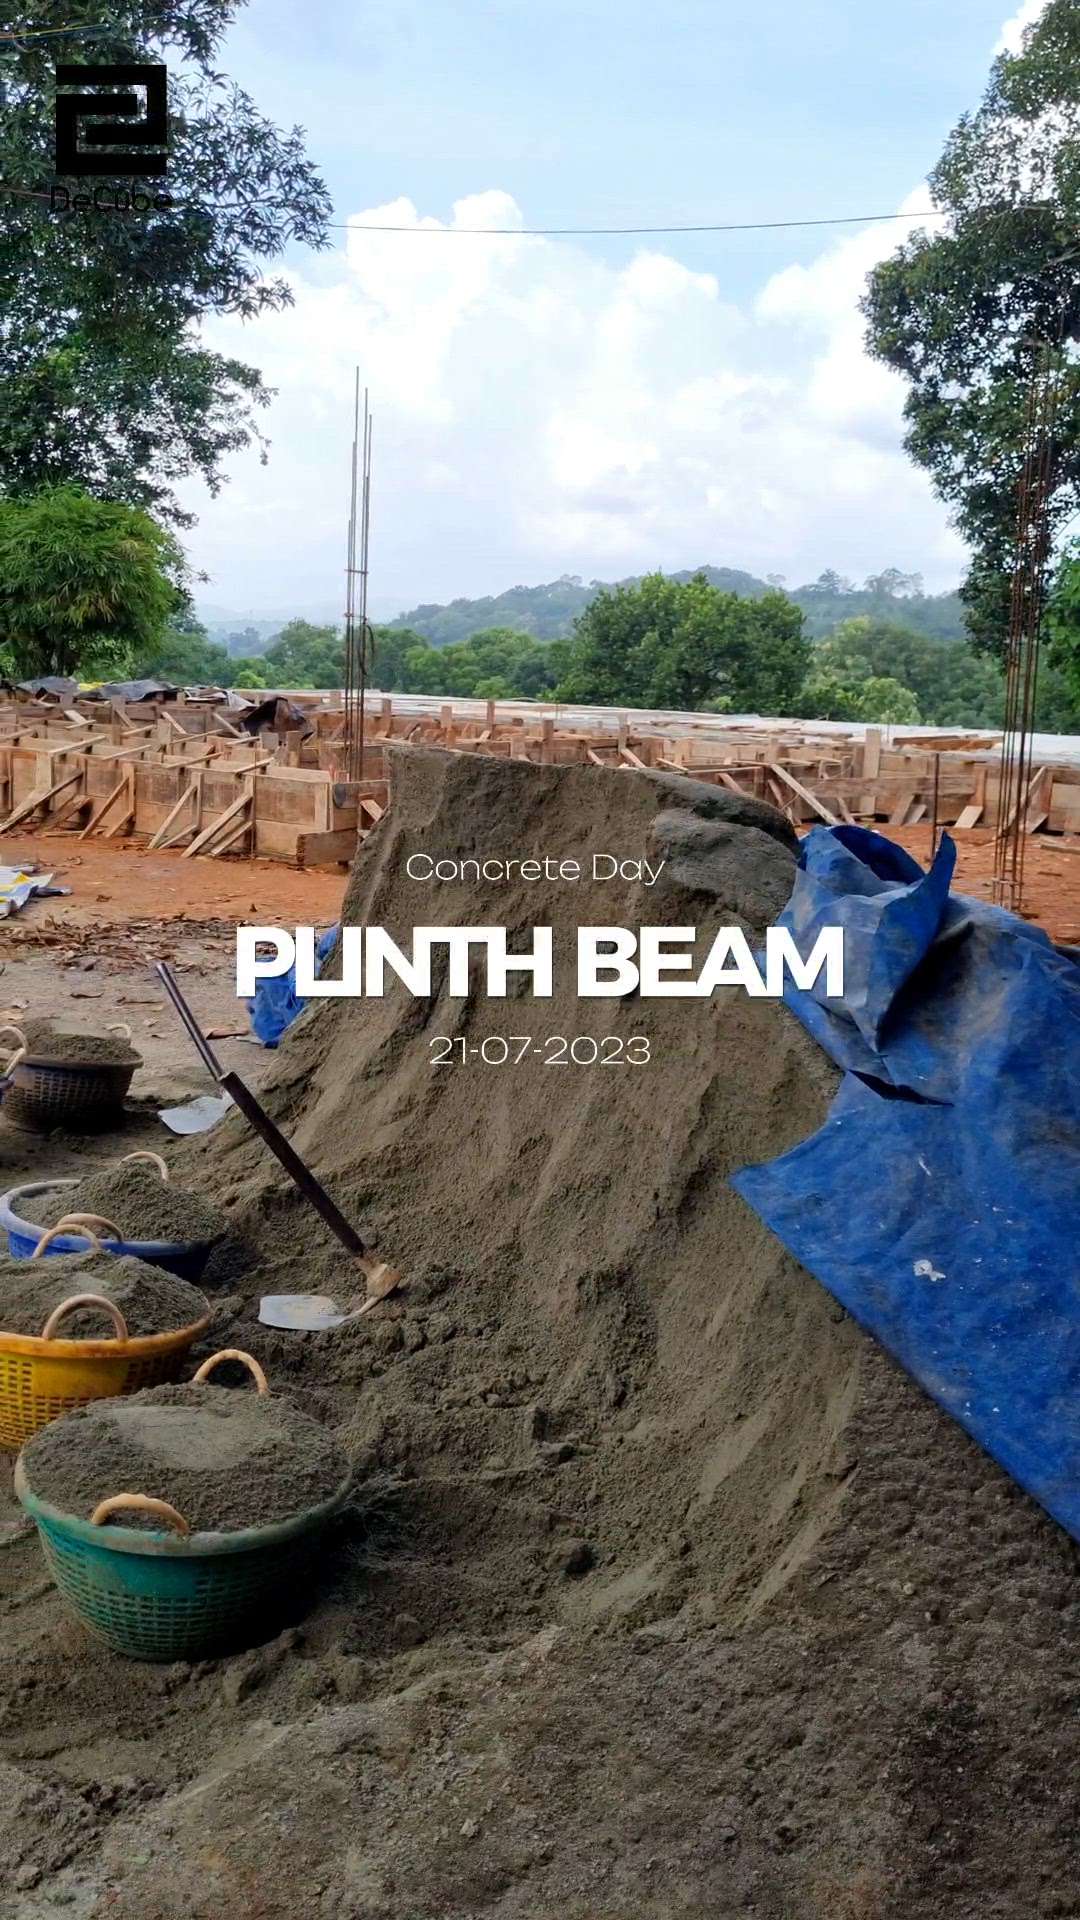 Plinth beam concrete at kanjirapally  #constructionsite #plinthbeam